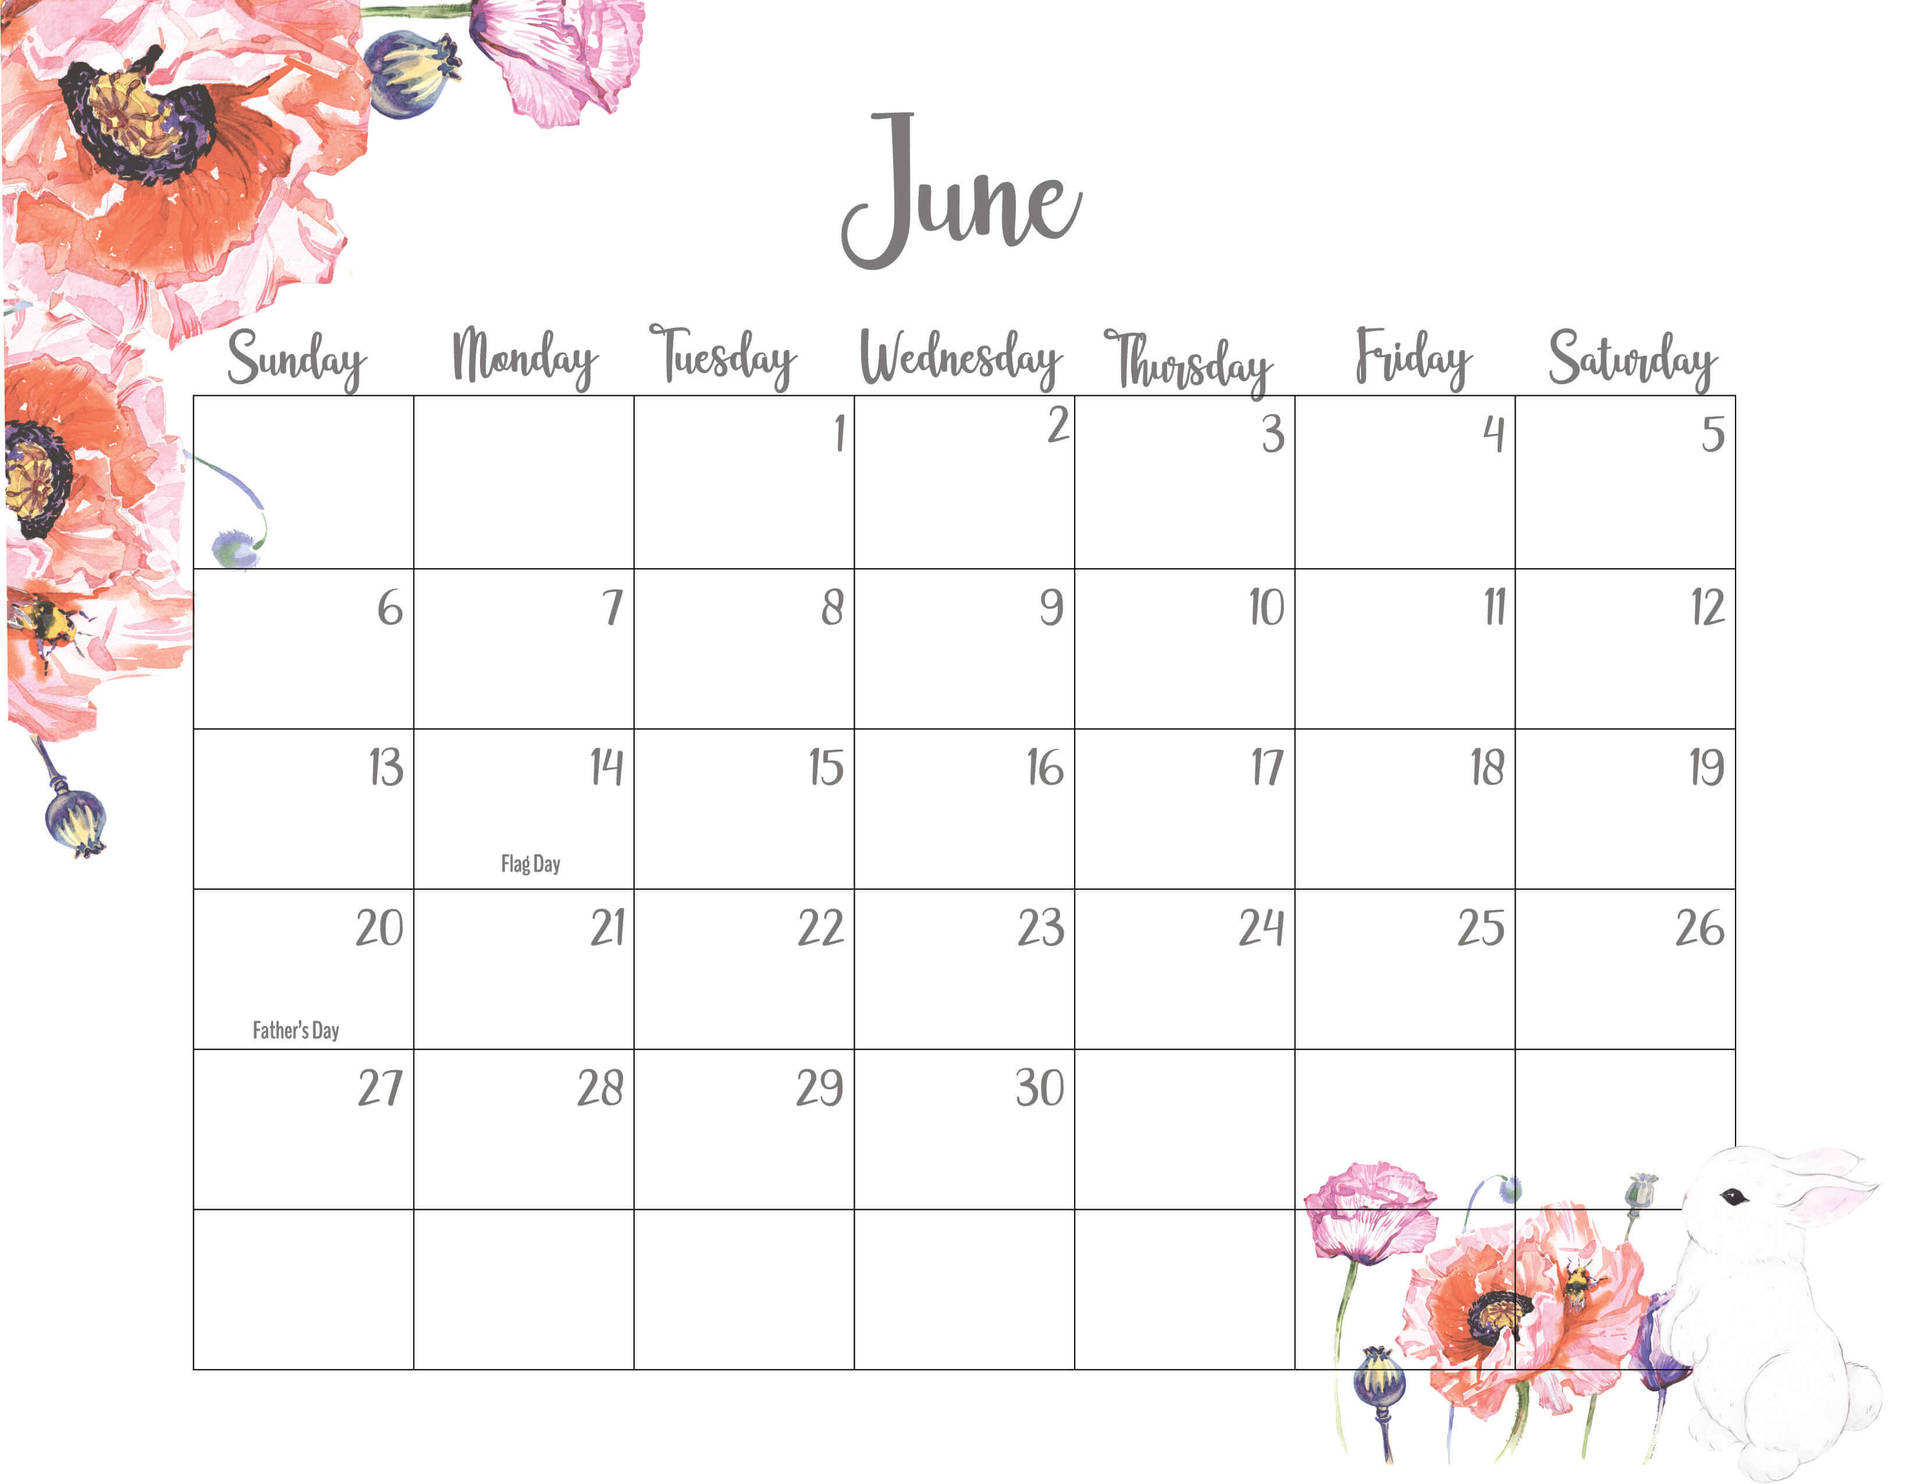 June Agenda Background